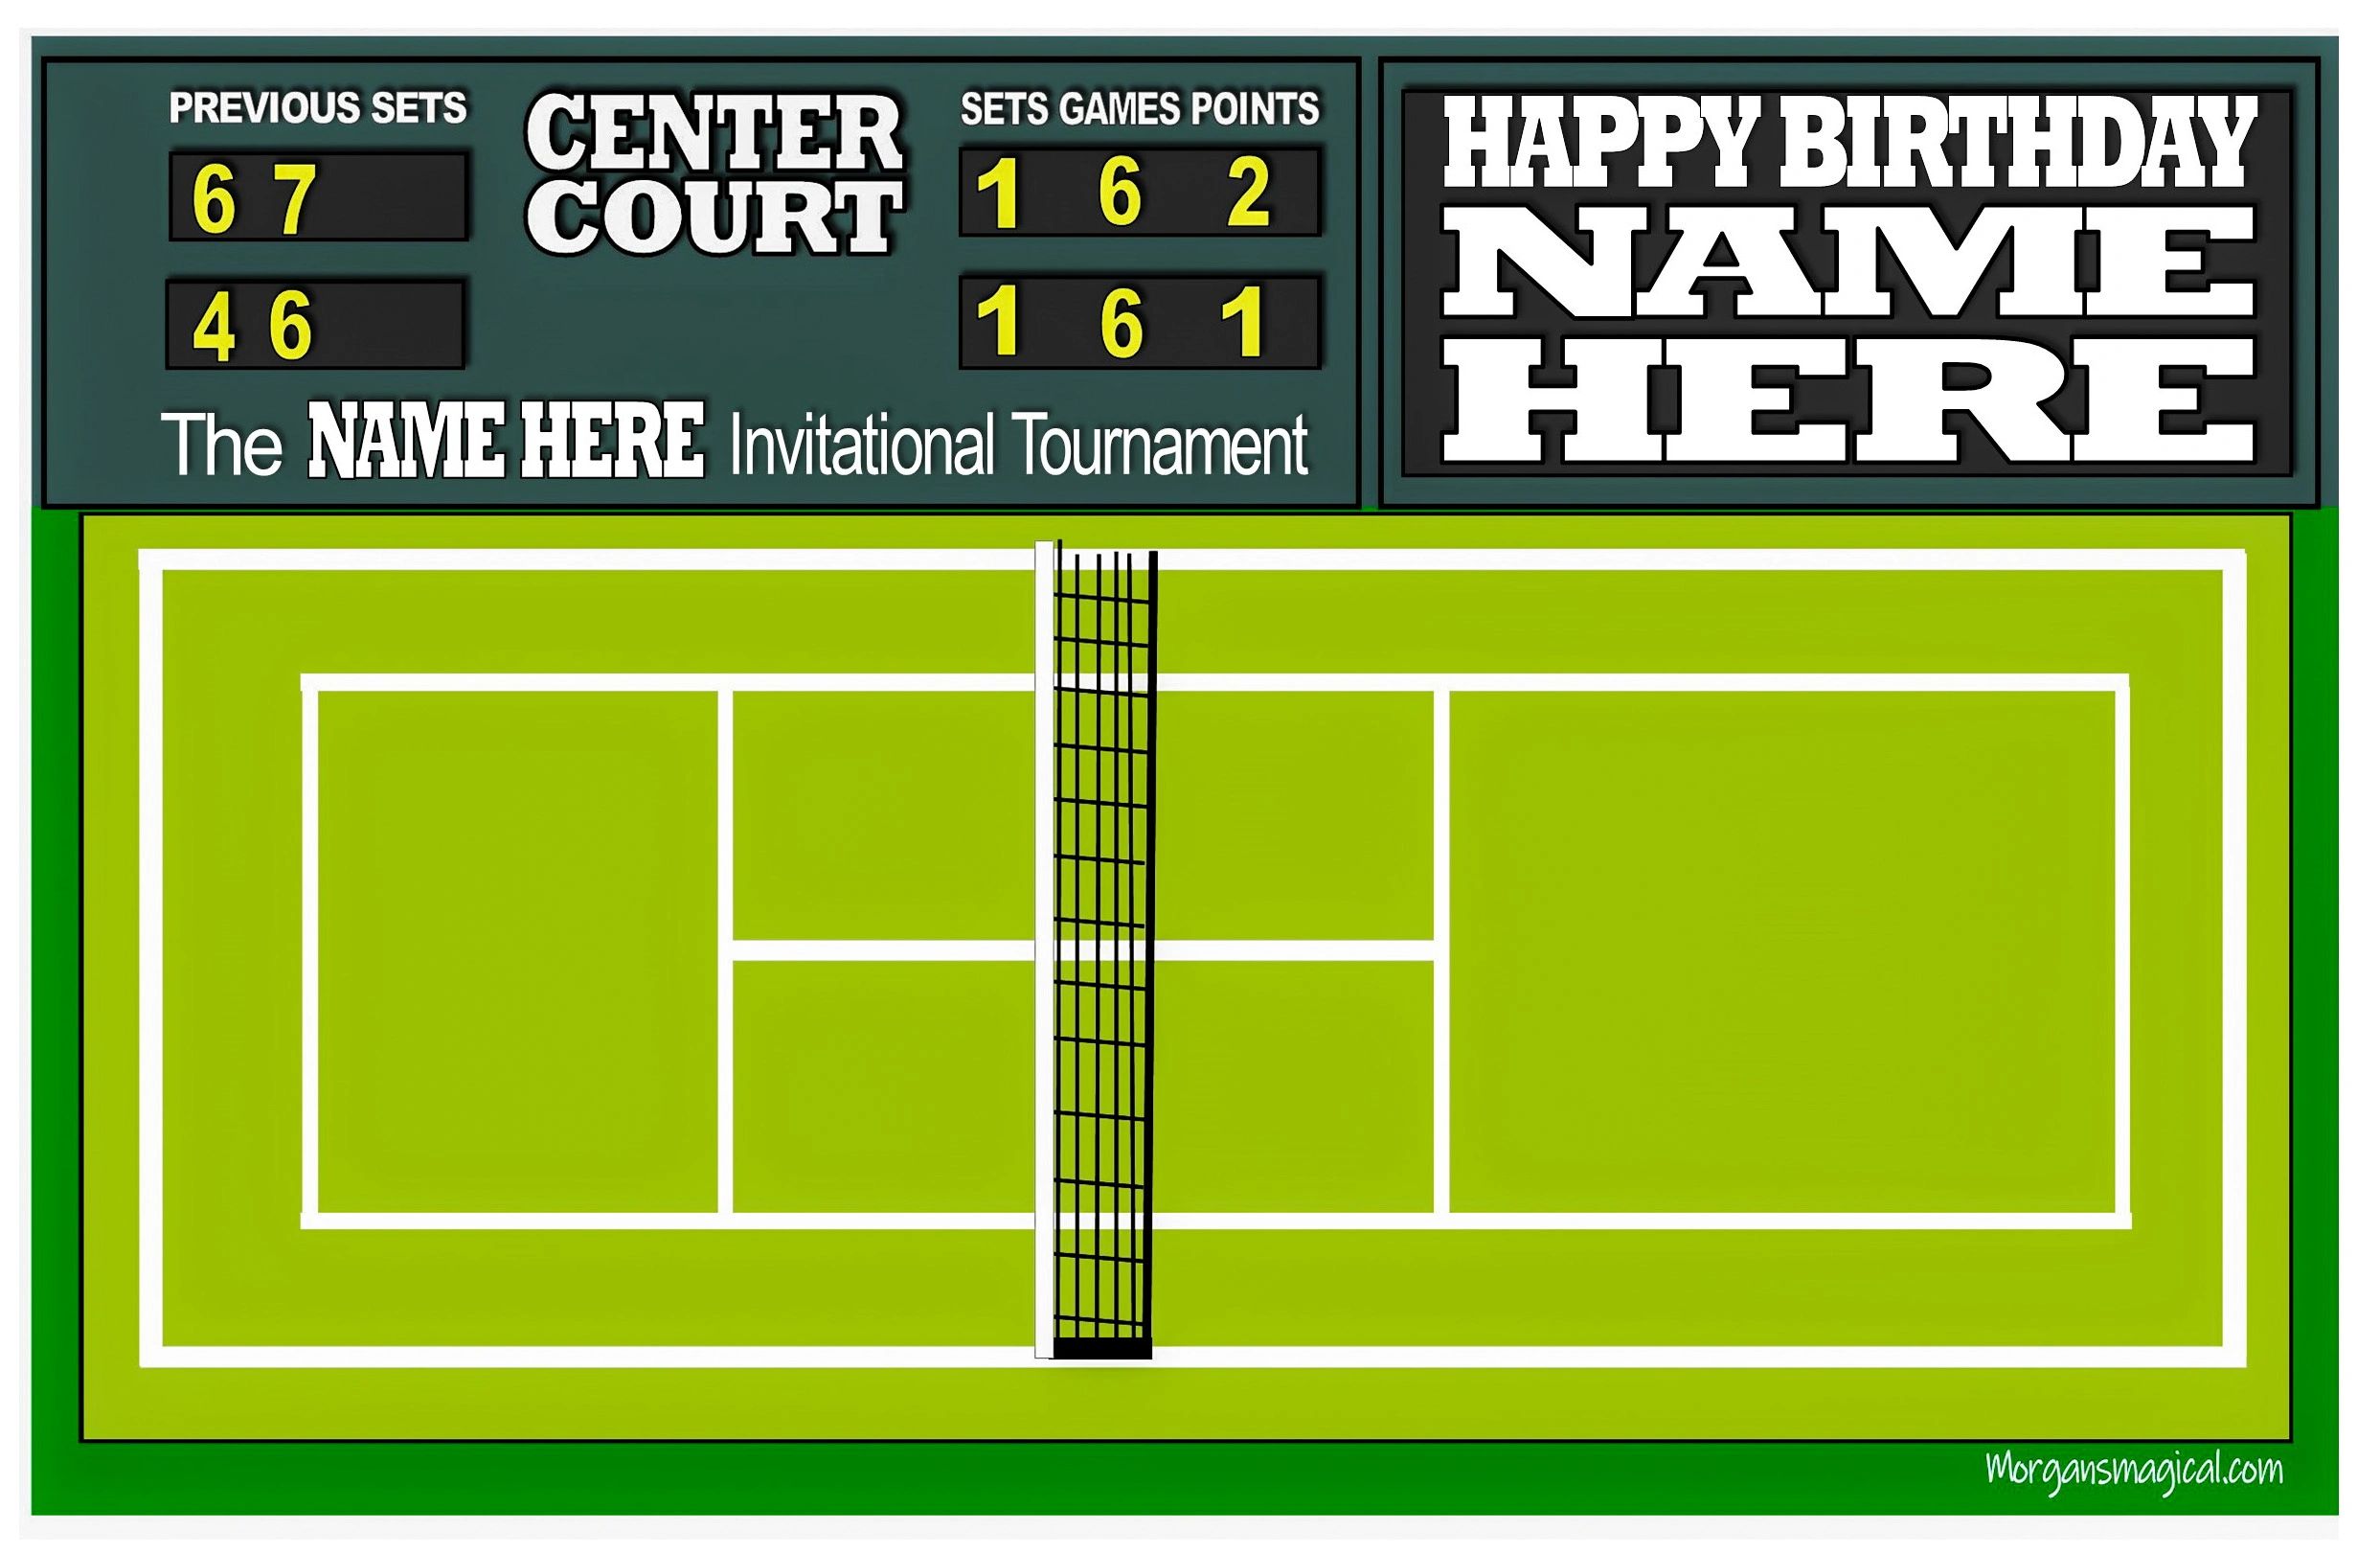 Center Court - Personalized Birthday eCard